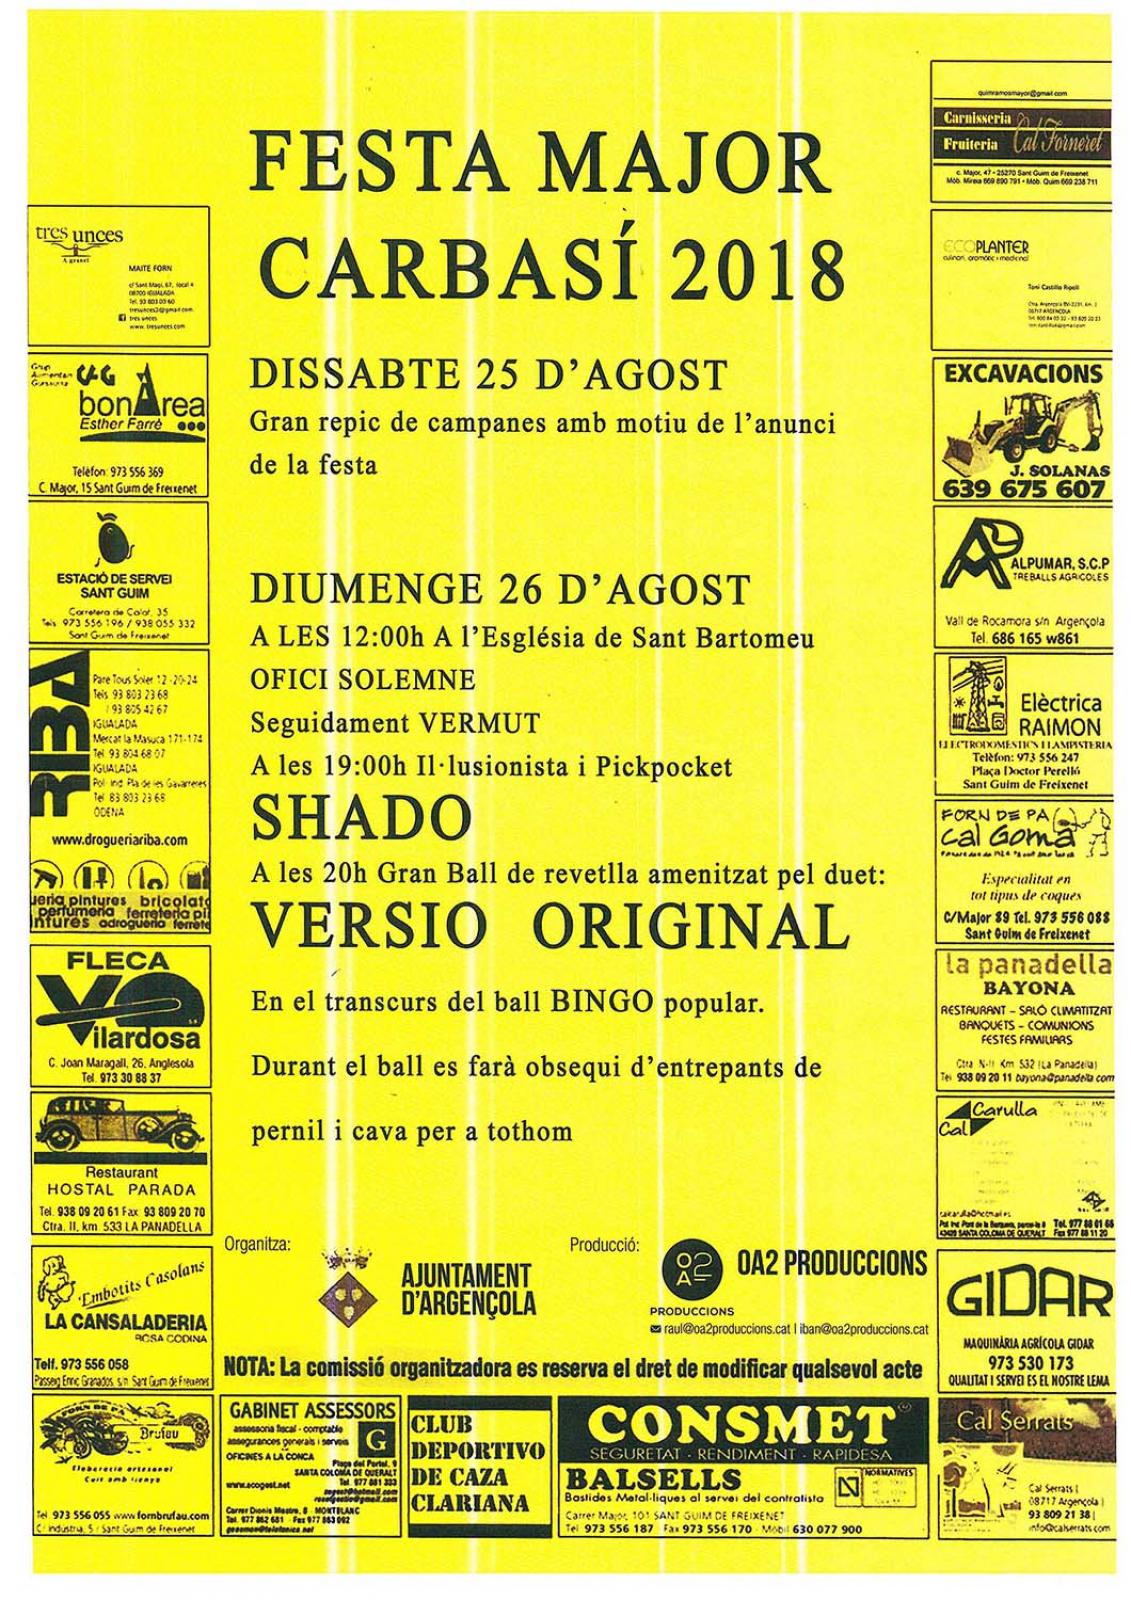 Festa Major de Carbasí 2018